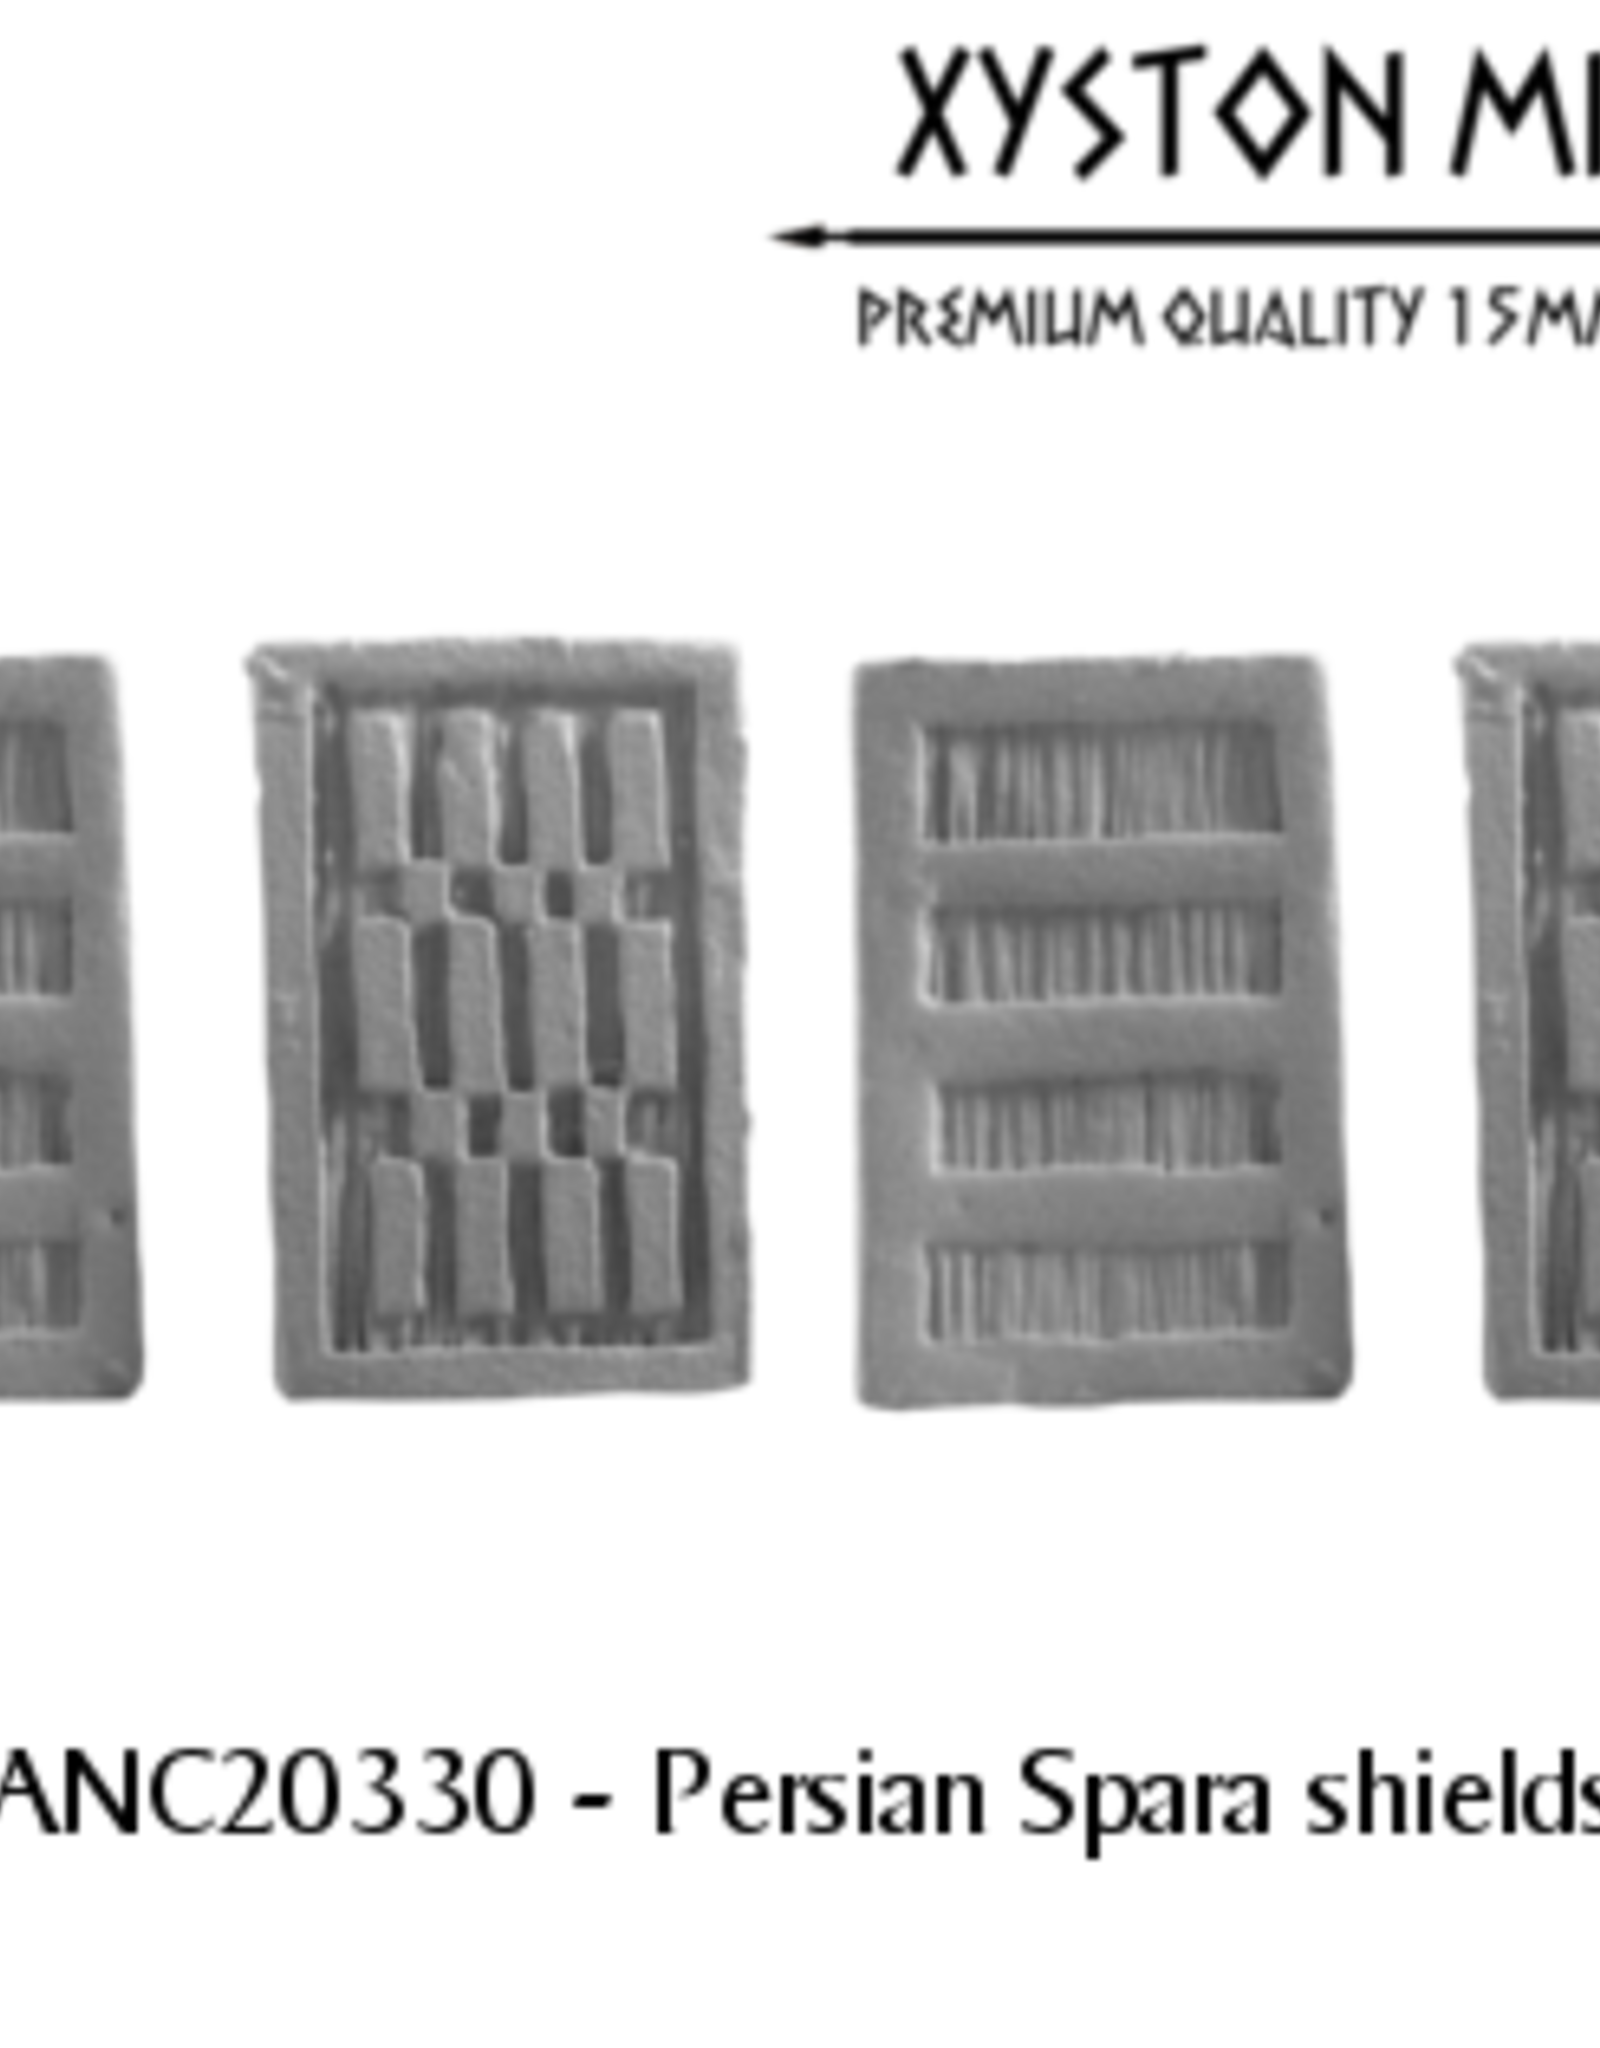 Xyston ANC20330 - Persian Spara shields